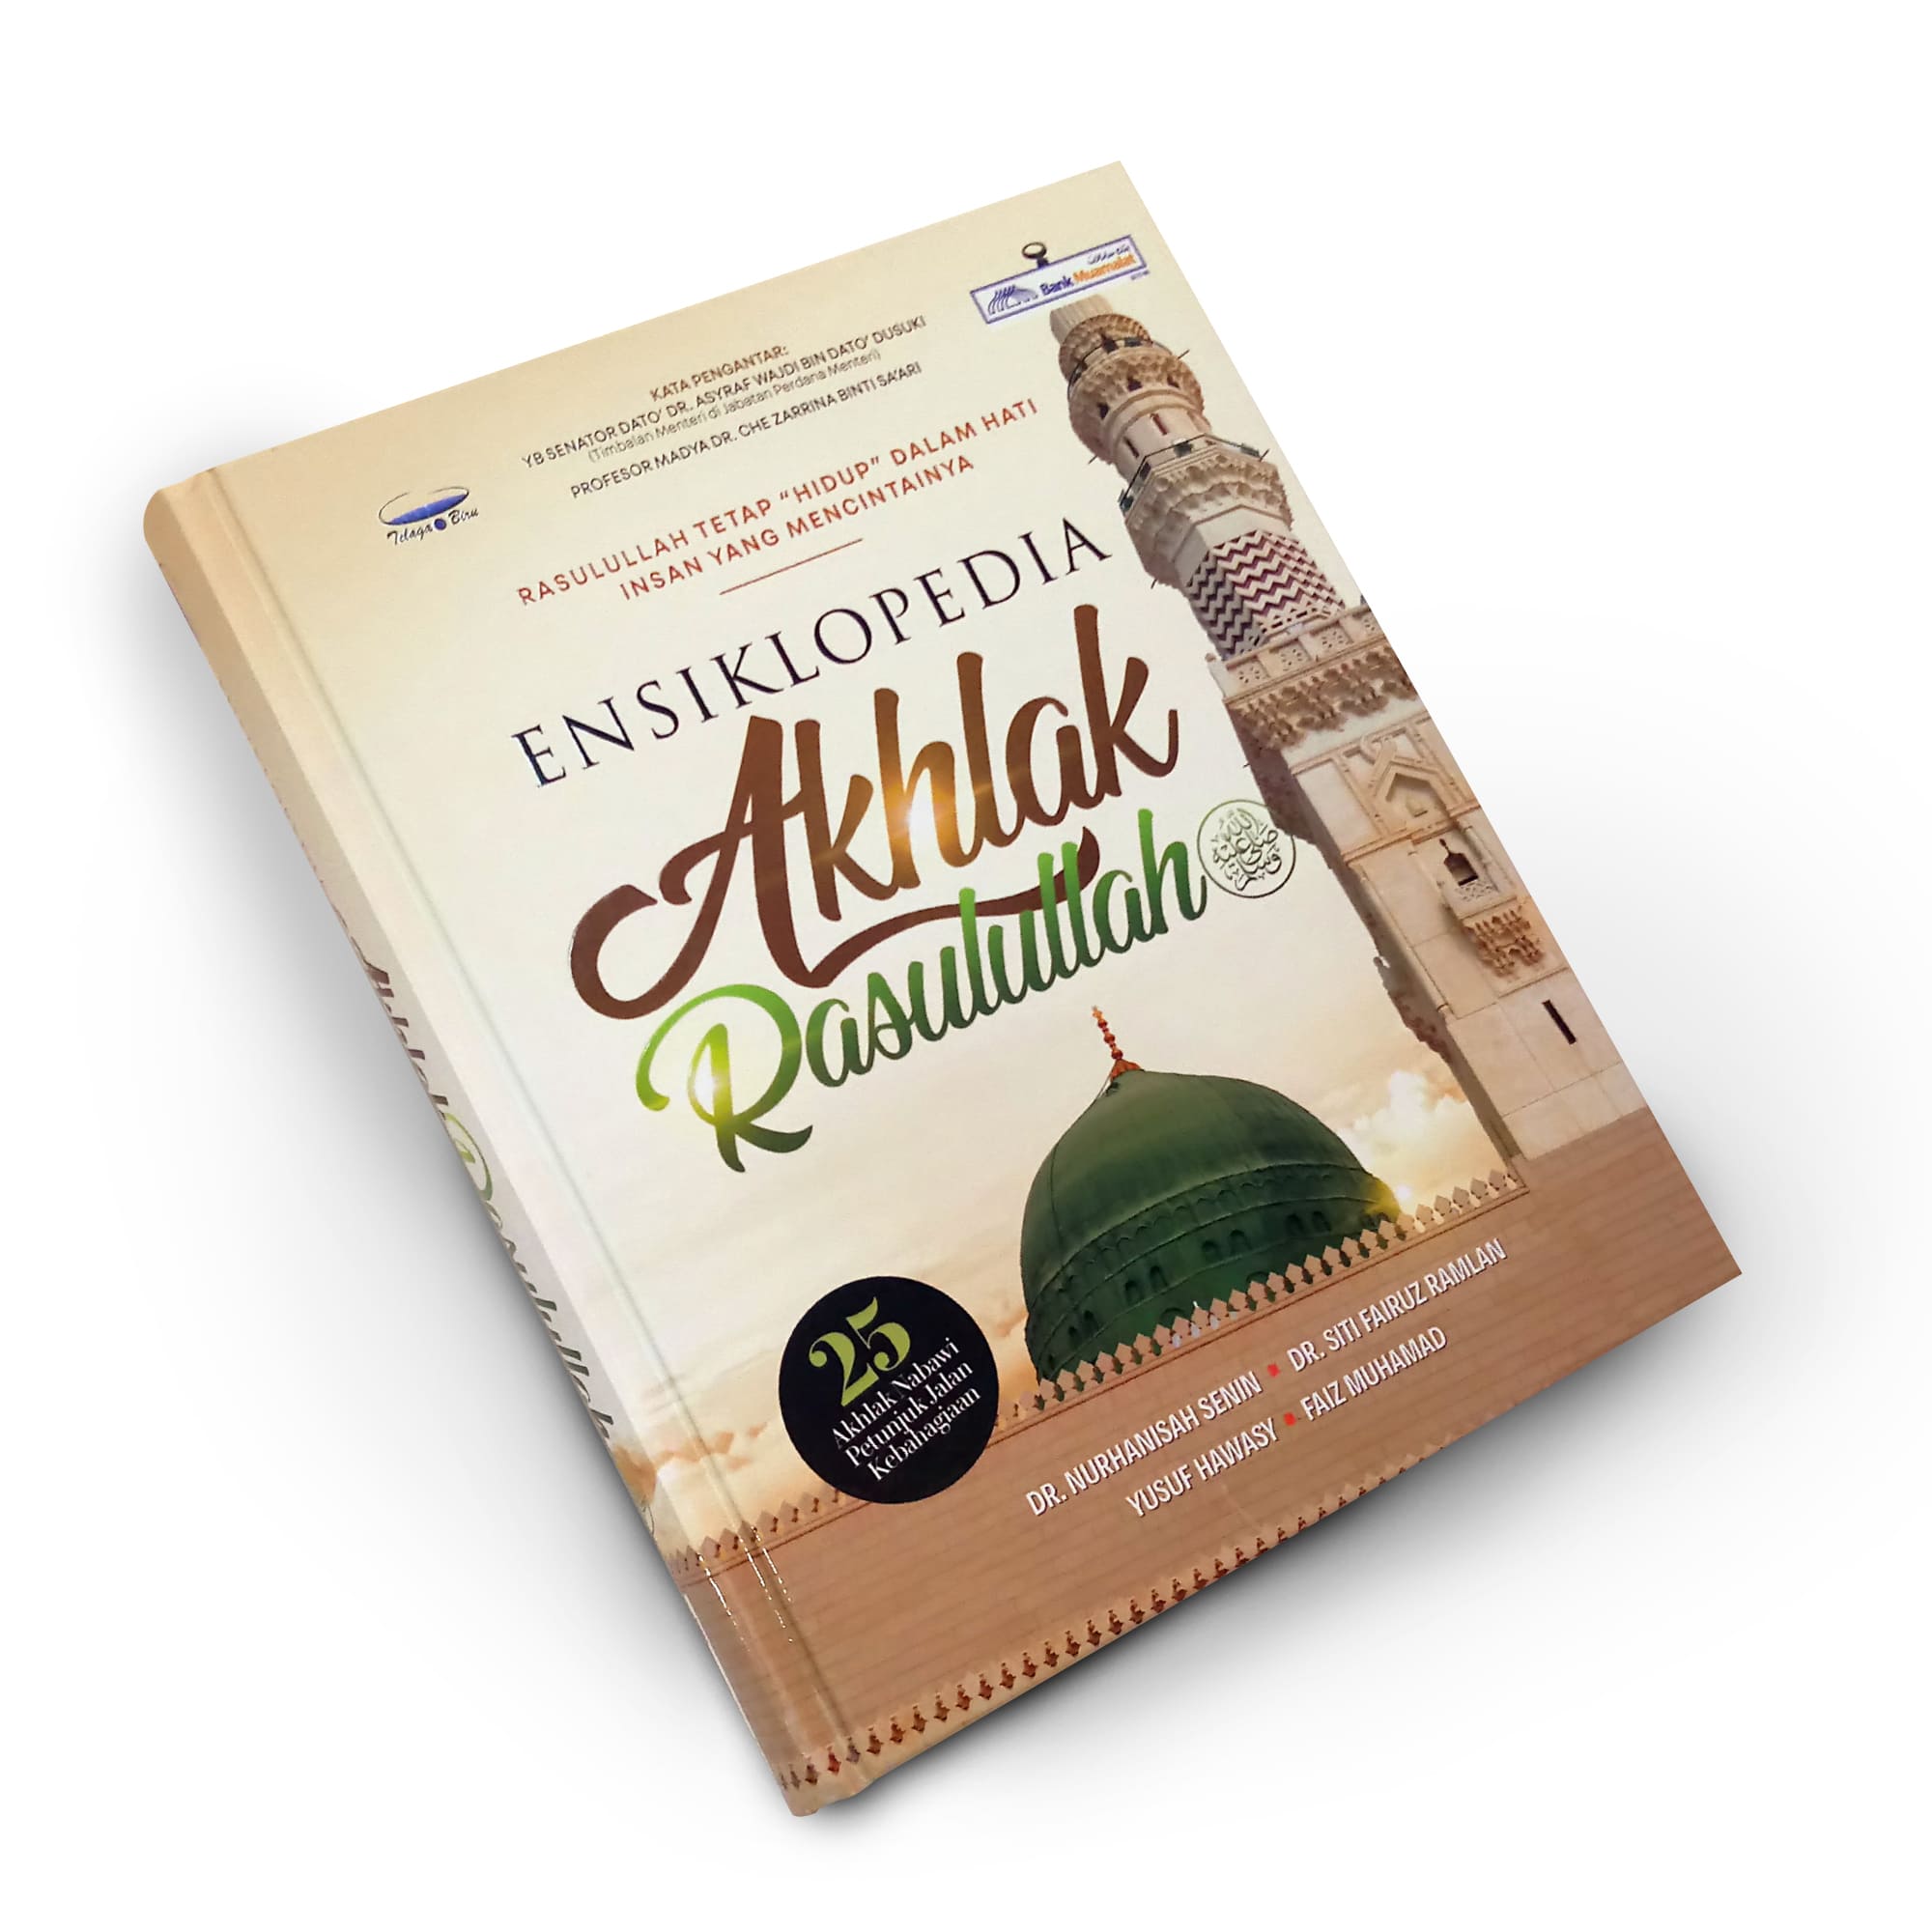 Ensiklopedia Akhlak Rasulullah (Malay)